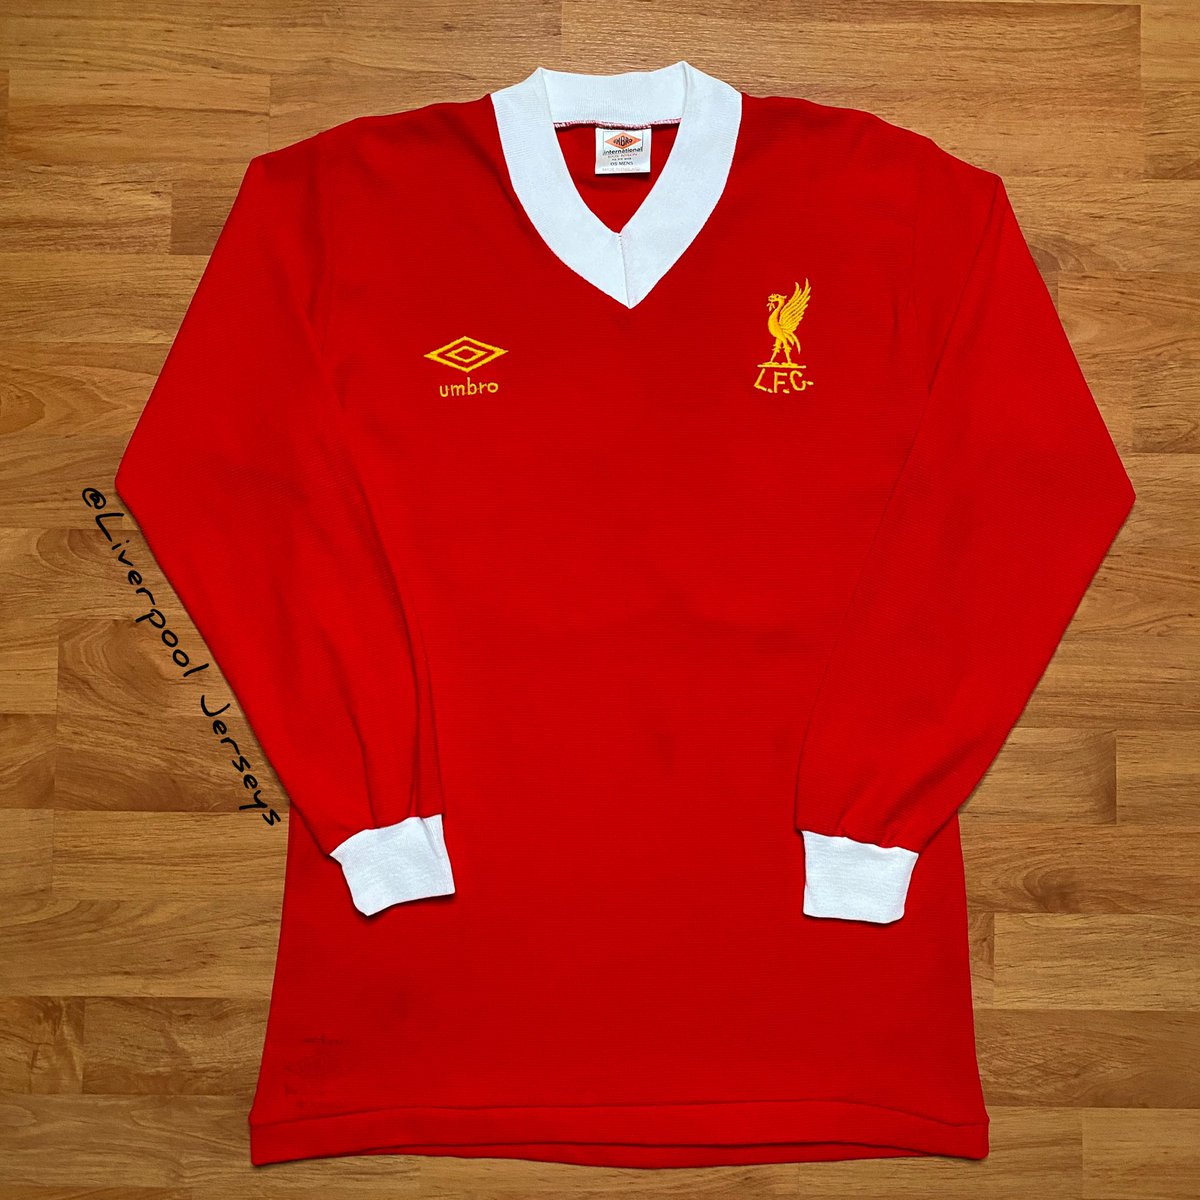 1978-1982 Liverpool Home Match Shirt No.15
#matchworn #matchprepared #matchissued #playershirt #liverpool #liverpoolfc #footballshirtcollection #footballshirtcollector #ynwa #lfc